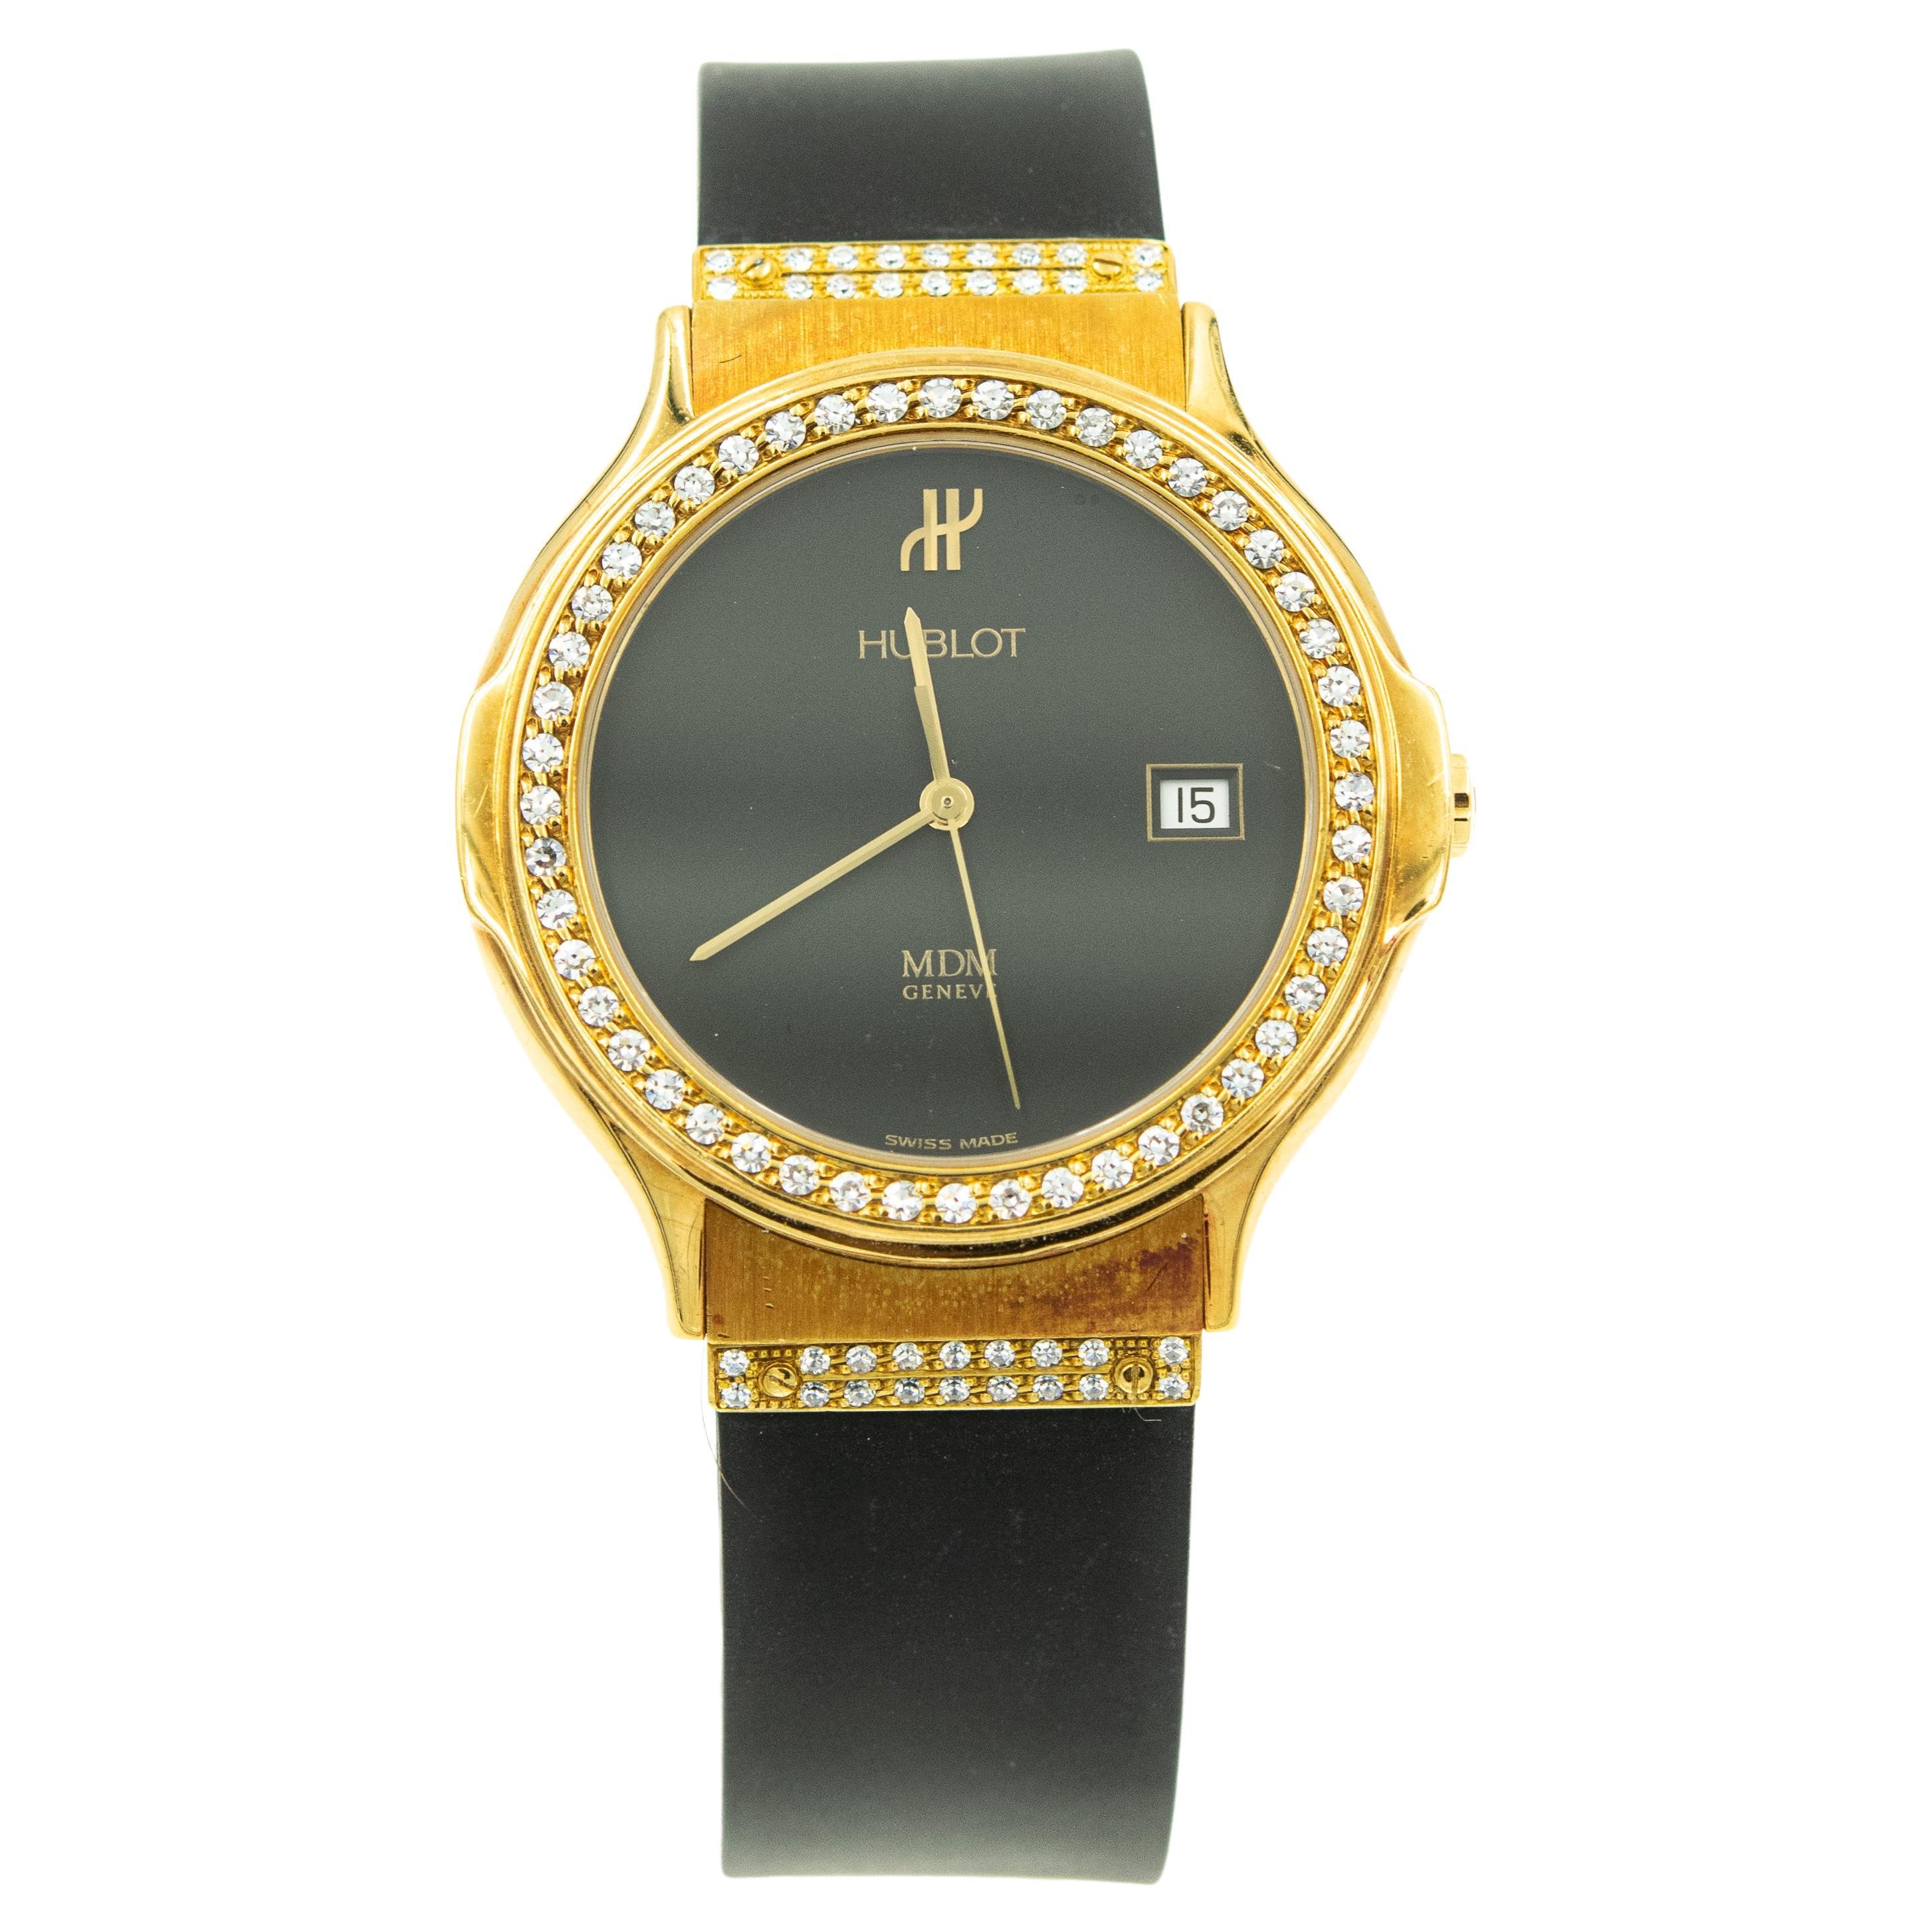 Hublot Men's MDM 18k Yellow Gold Watch Ref. 1520.3.054